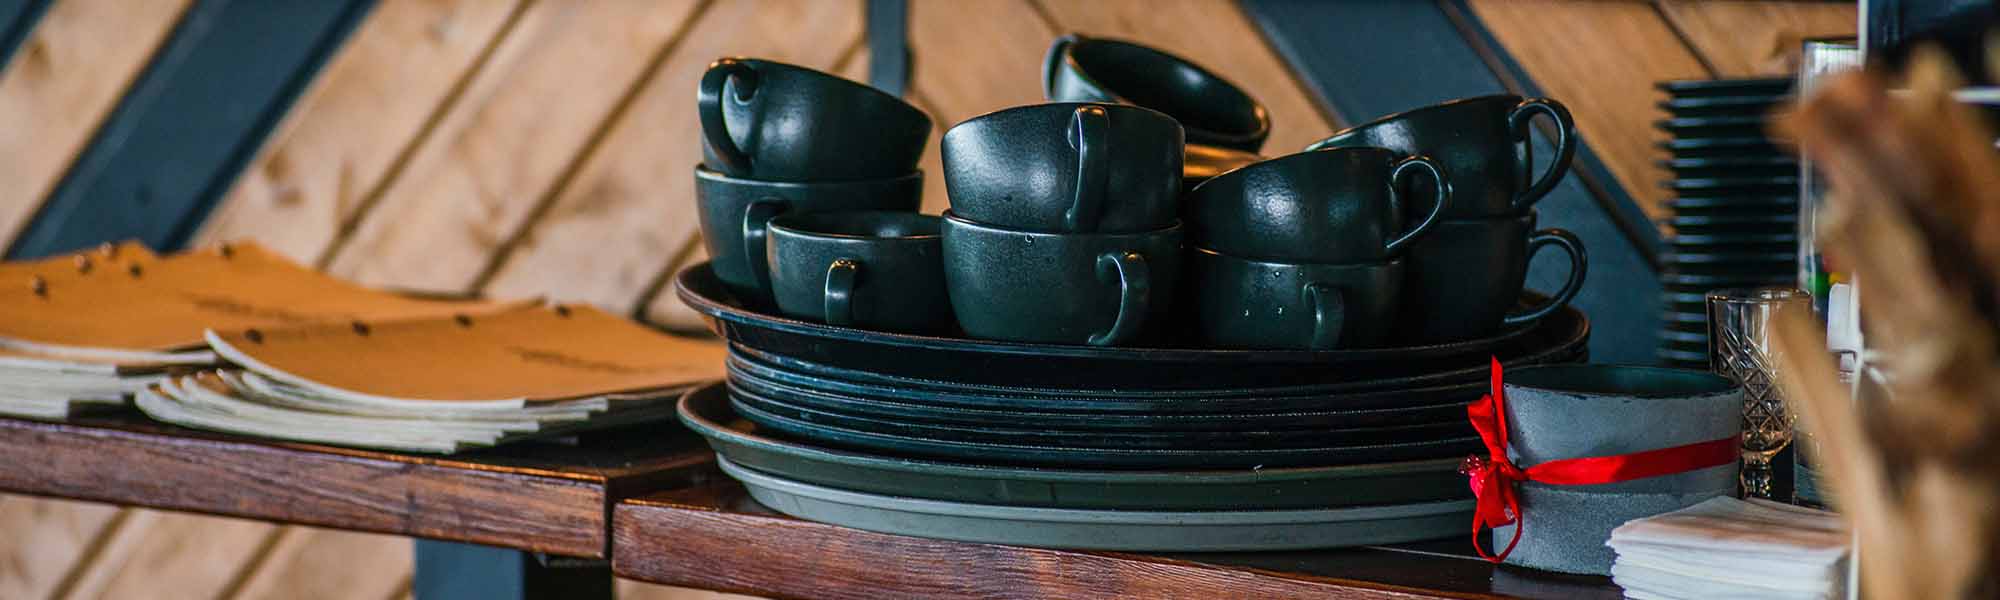 Handmade black ceramic trays and cups on the shelf